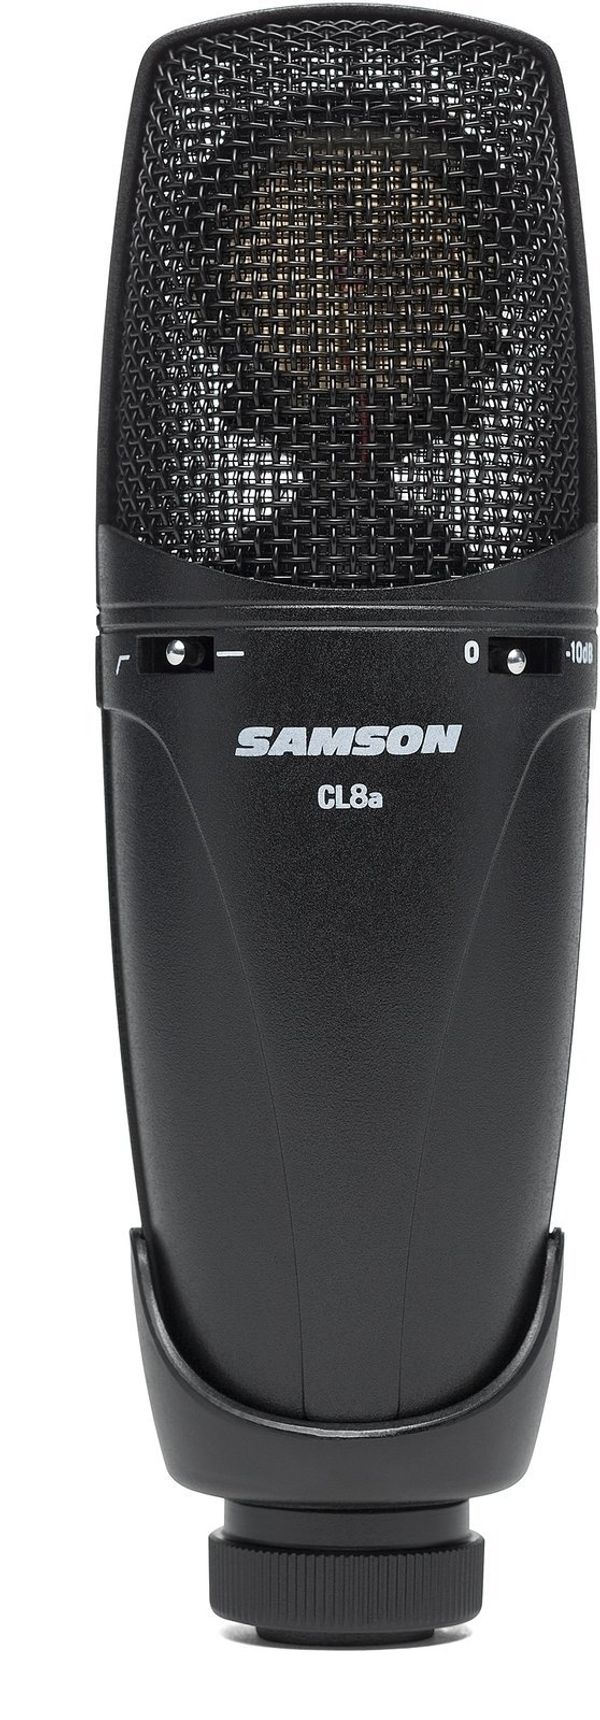 Samson Samson CL8a